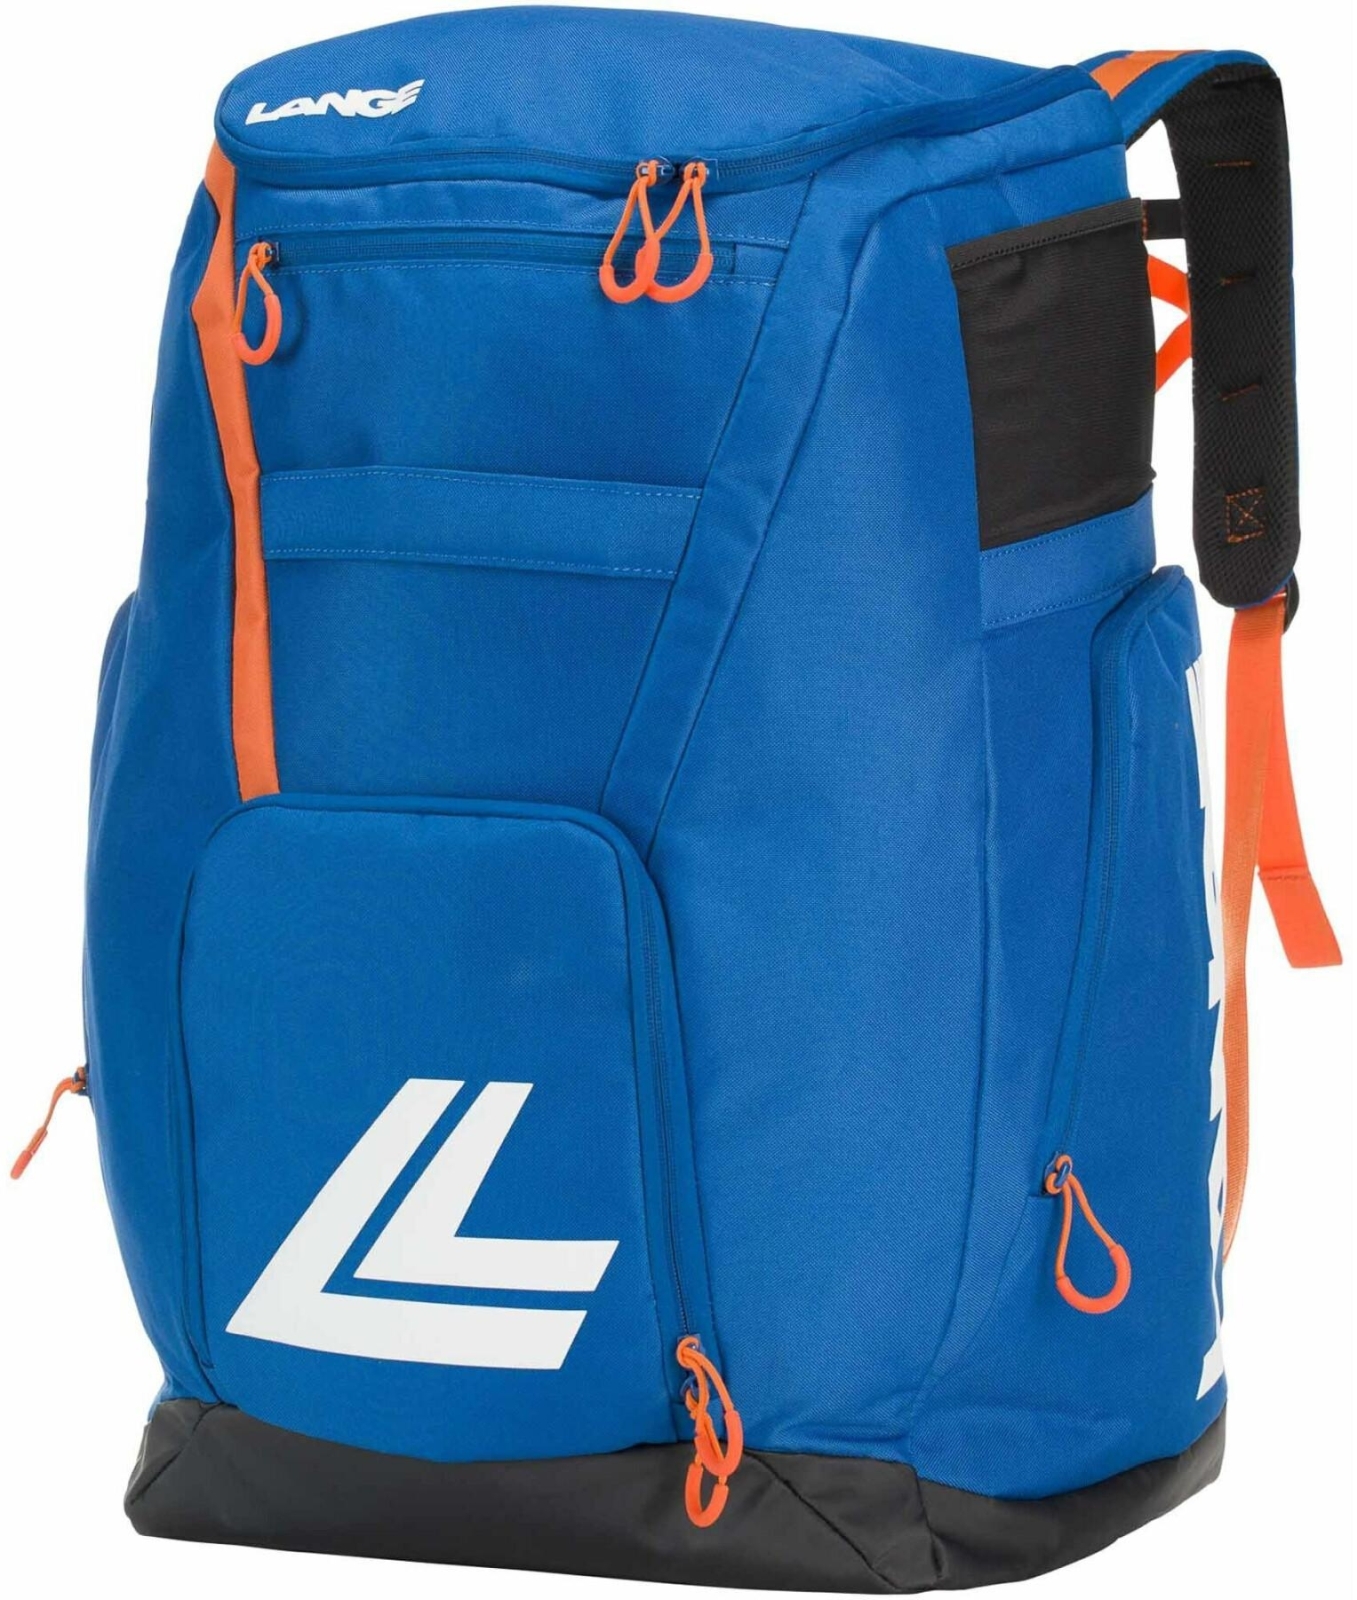 E-shop Lange Racer Bag Small uni